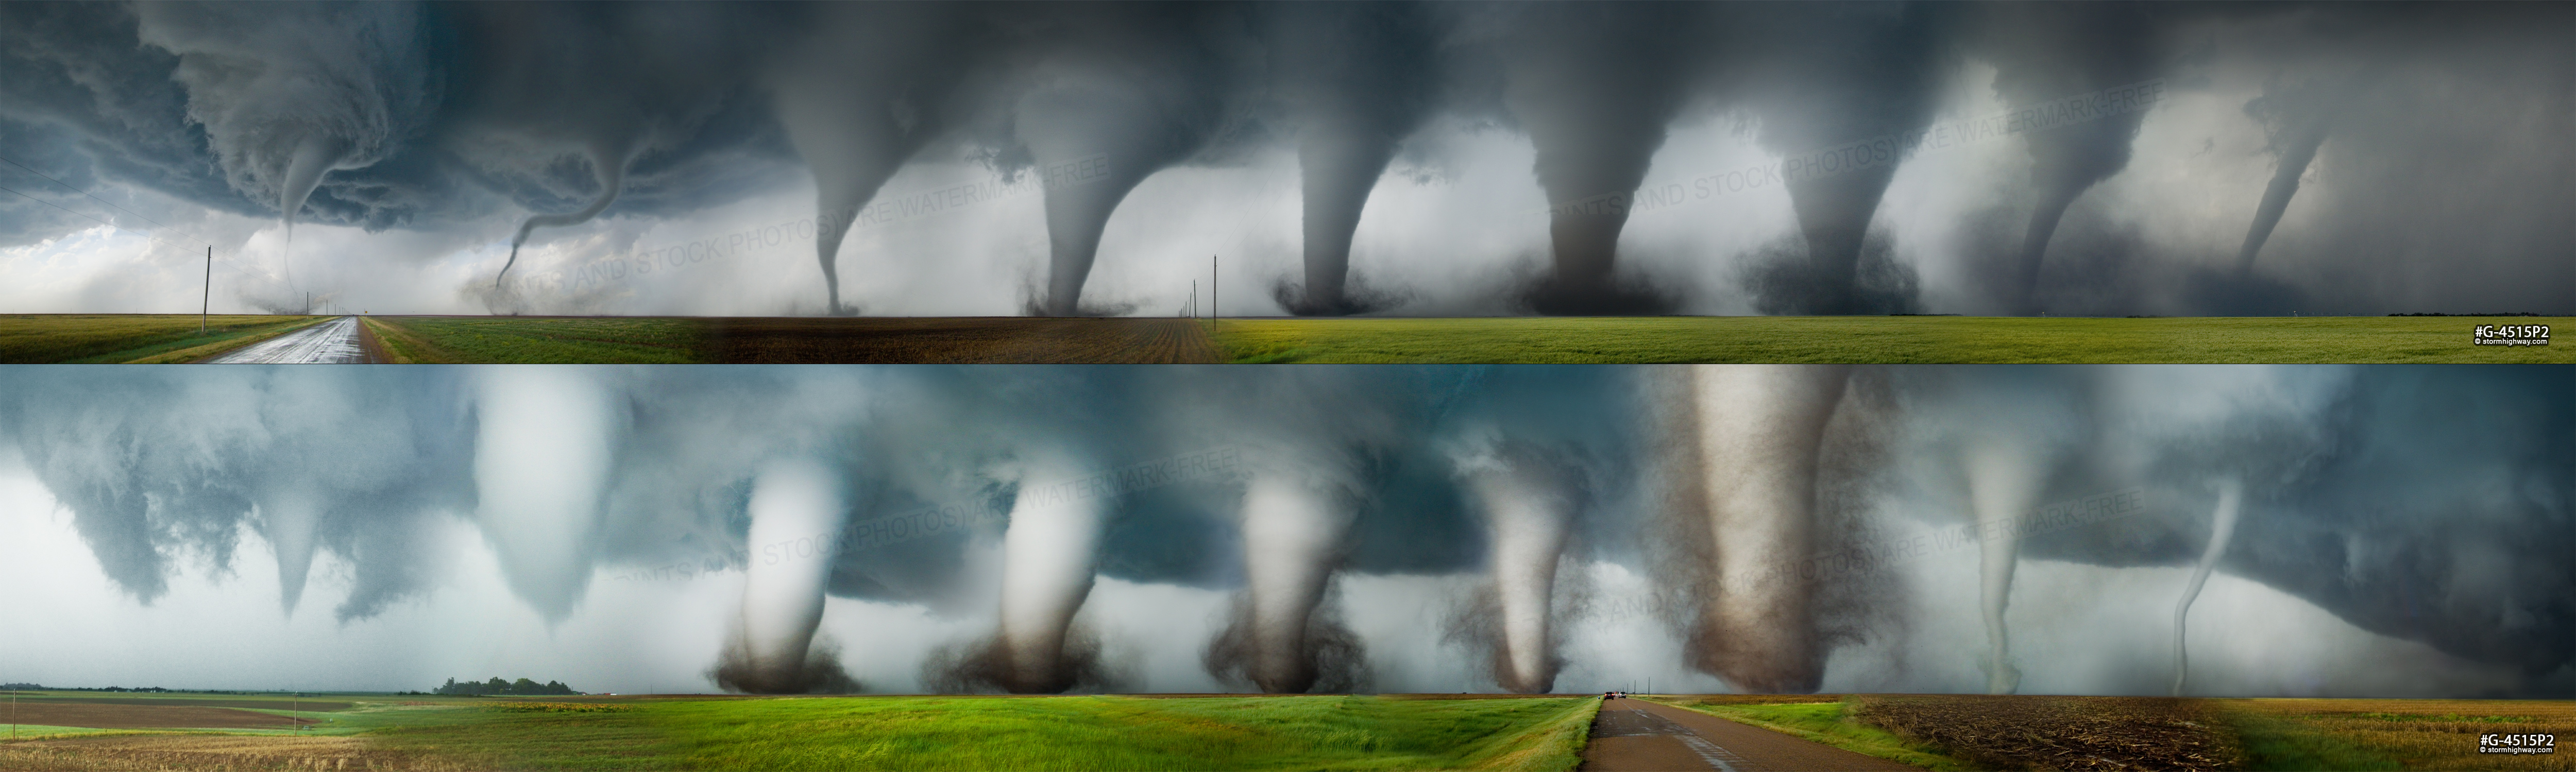 Tornado life cycle panoramas